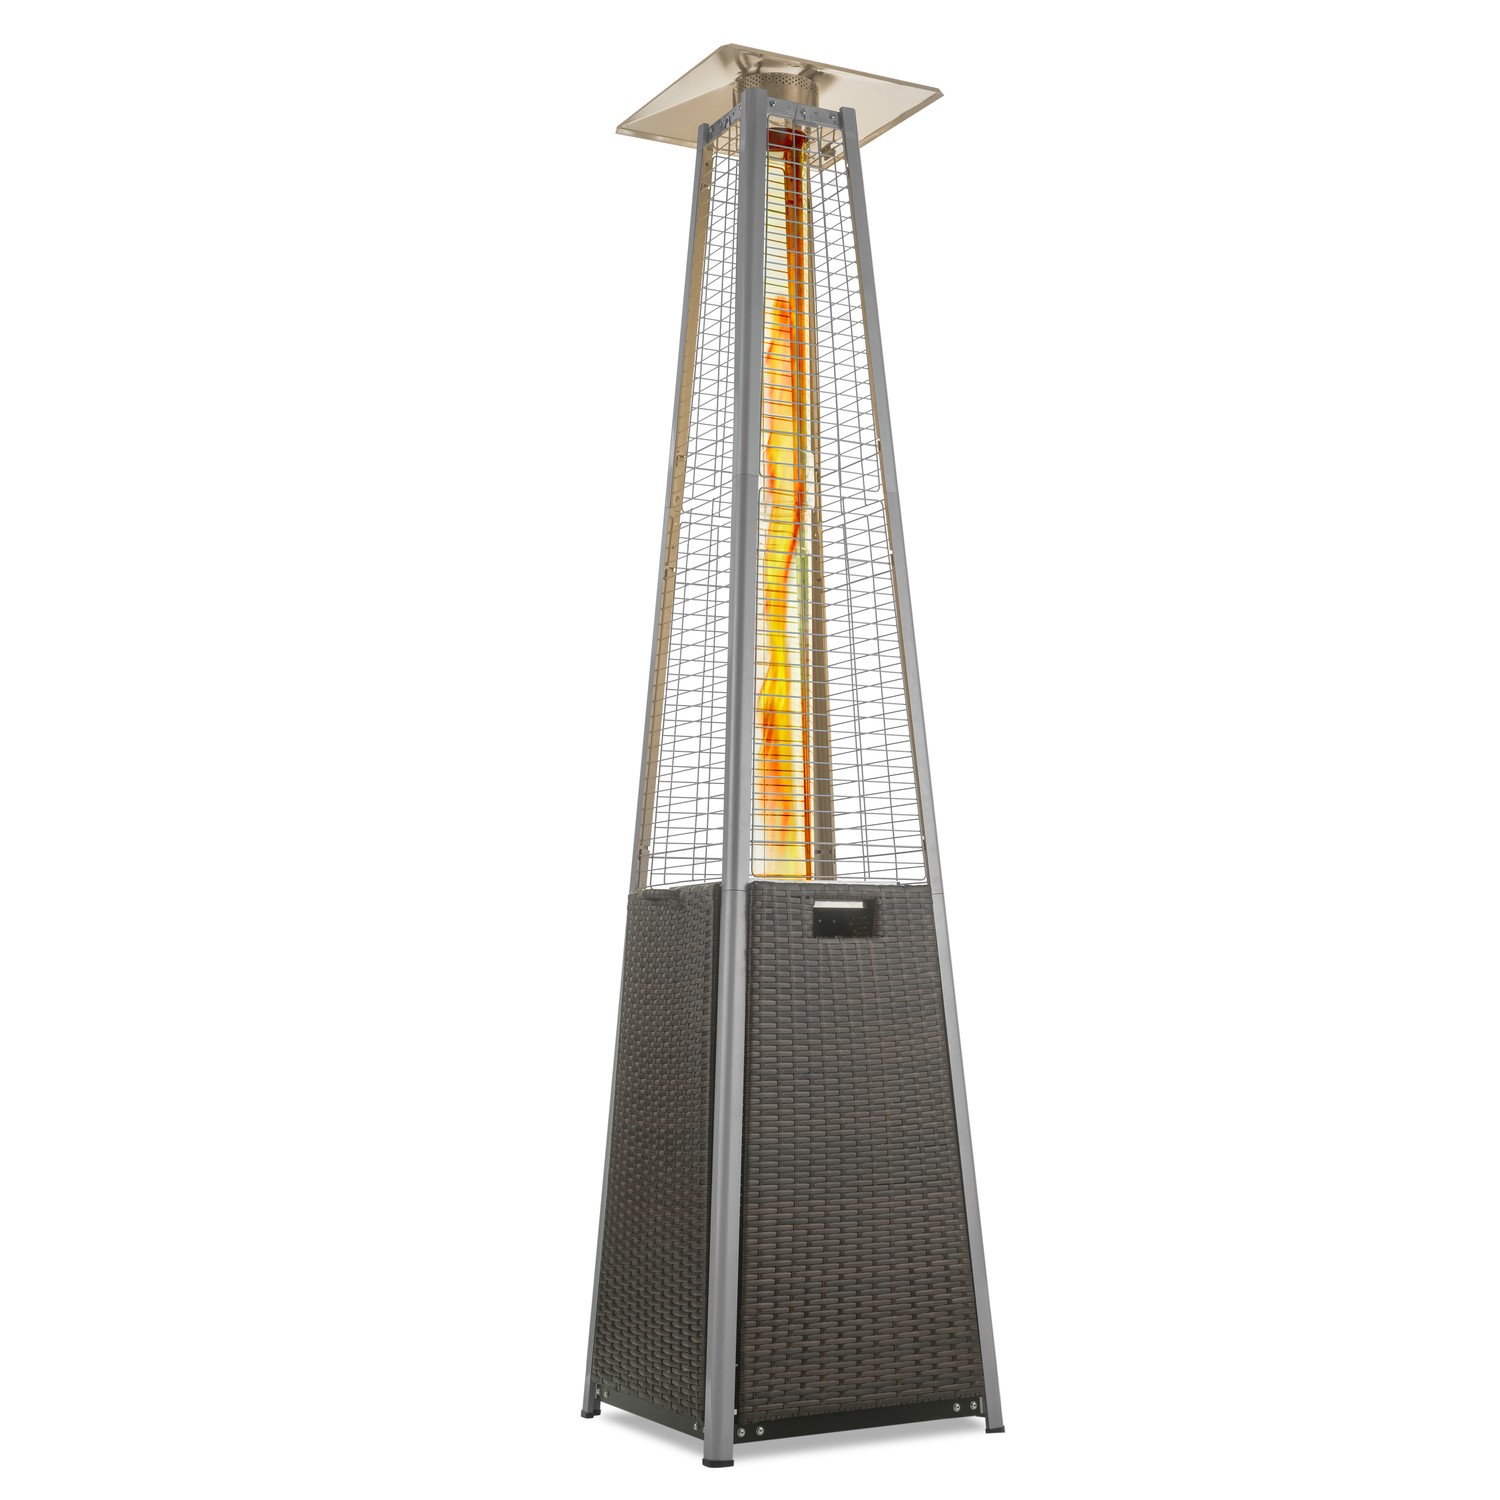 Refurbished electriQ EQODHFTBR Flame Tower Outdoor Gas Patio Heater in Brown Wicker/Rattan